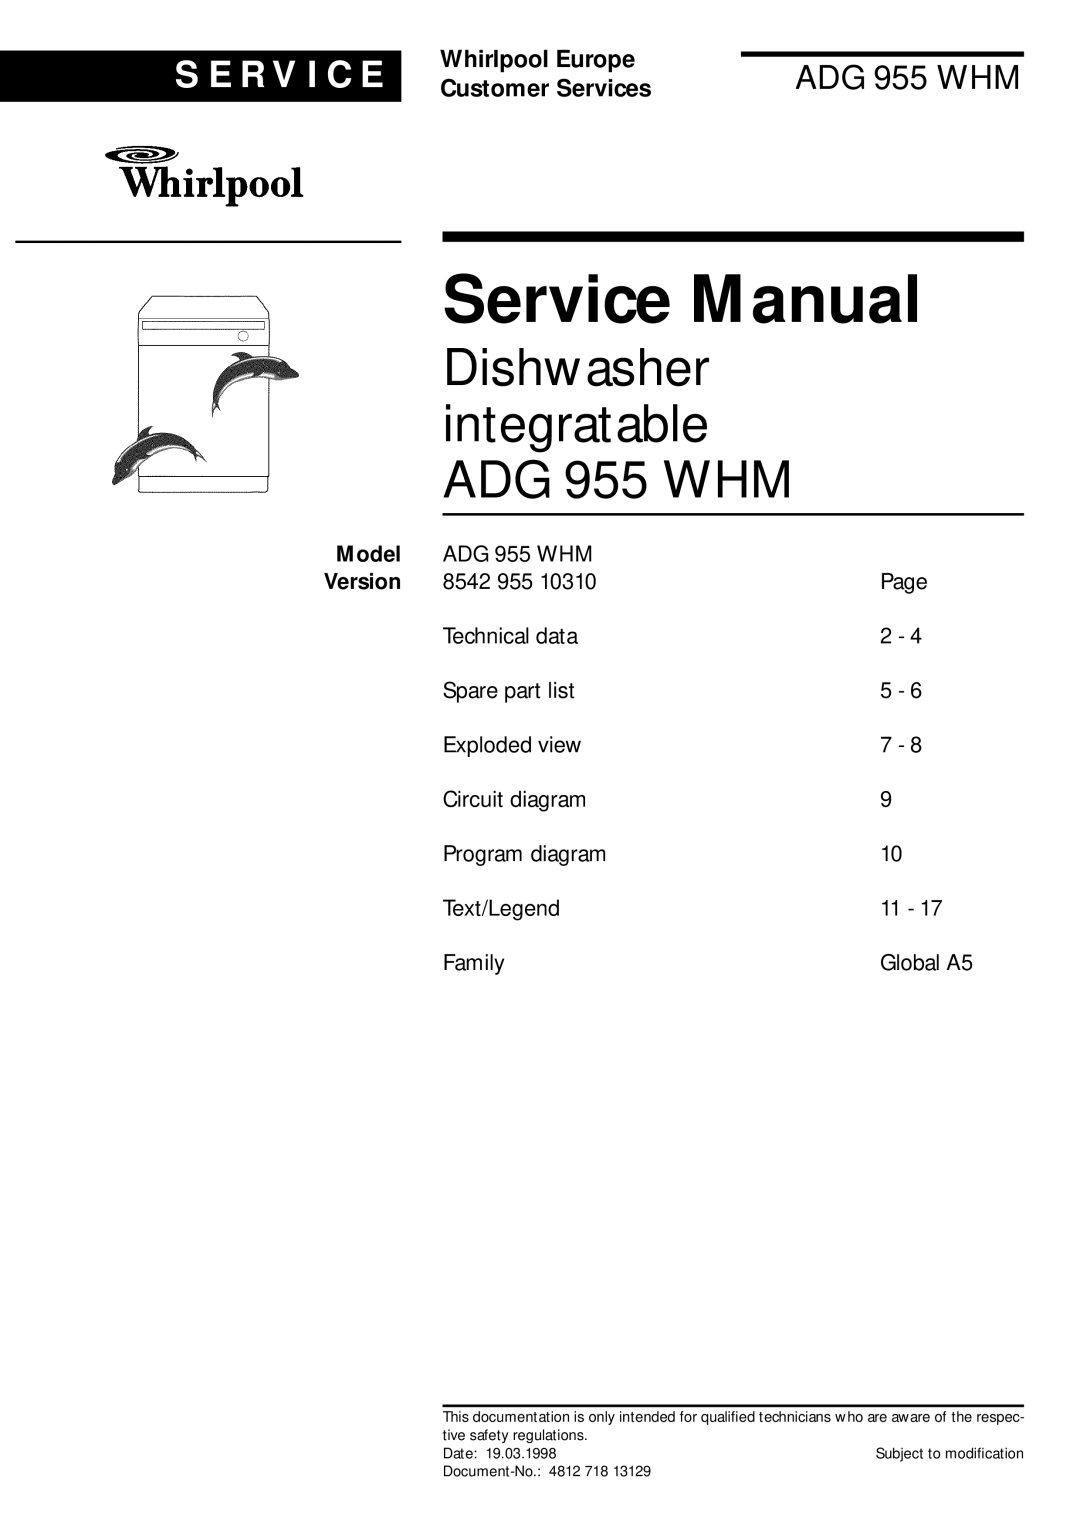 Whirlpool service manual Model, Dishwasher integratable ADG 955 WHM, S E R V I C E, Whirlpool Europe, Customer Services 